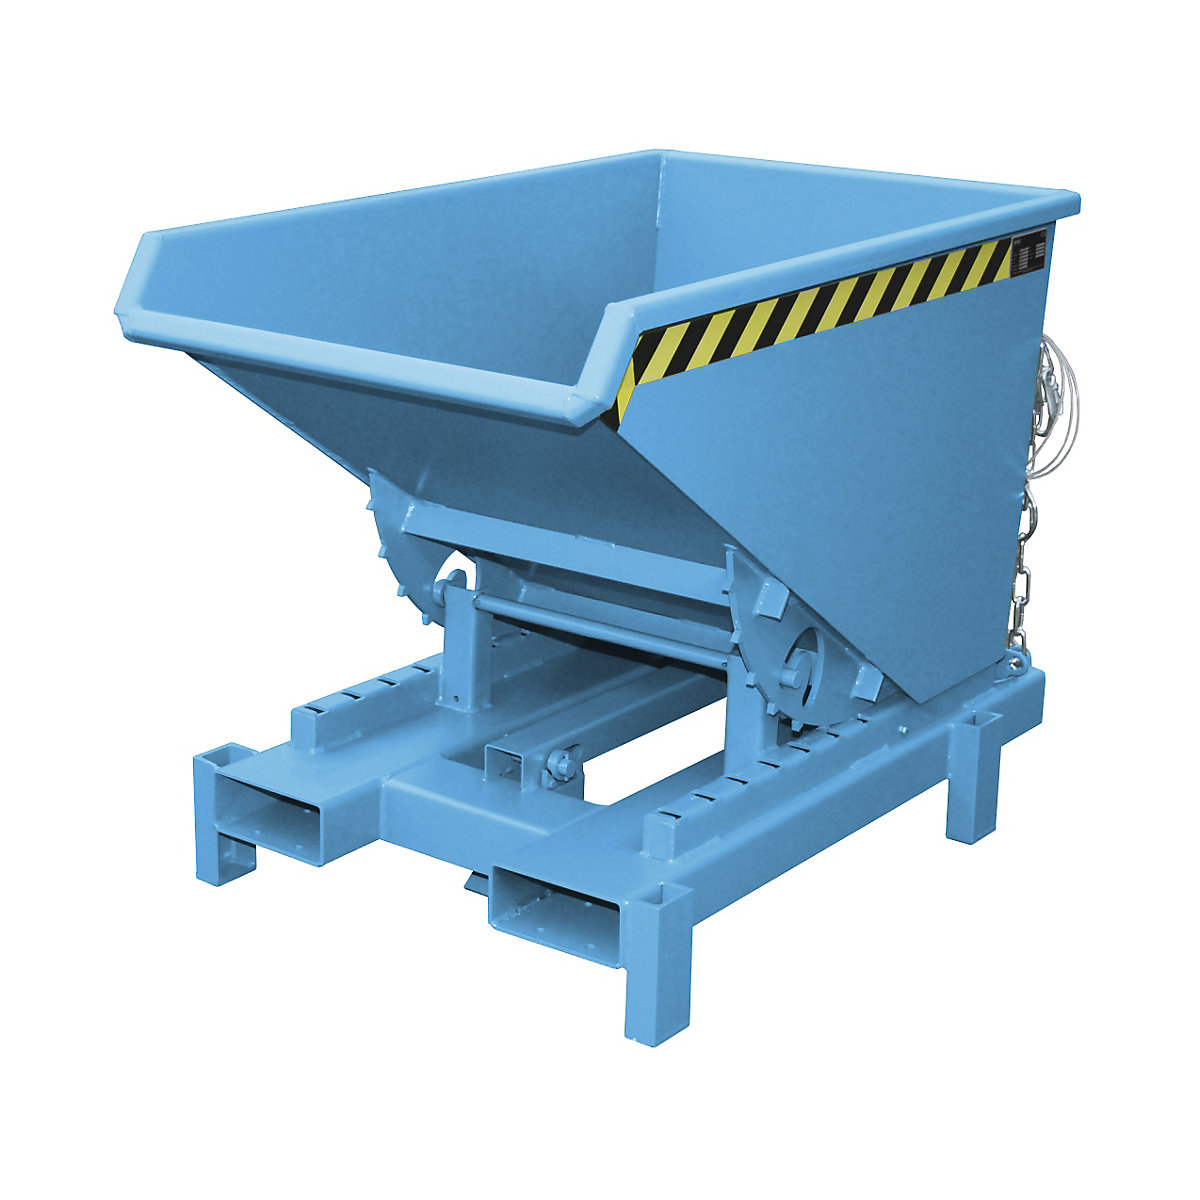 Prekucna posoda za velike obremenitve – eurokraft pro, prostornina 0,6 m³, nosilnost 4000 kg, modra RAL 5012-9